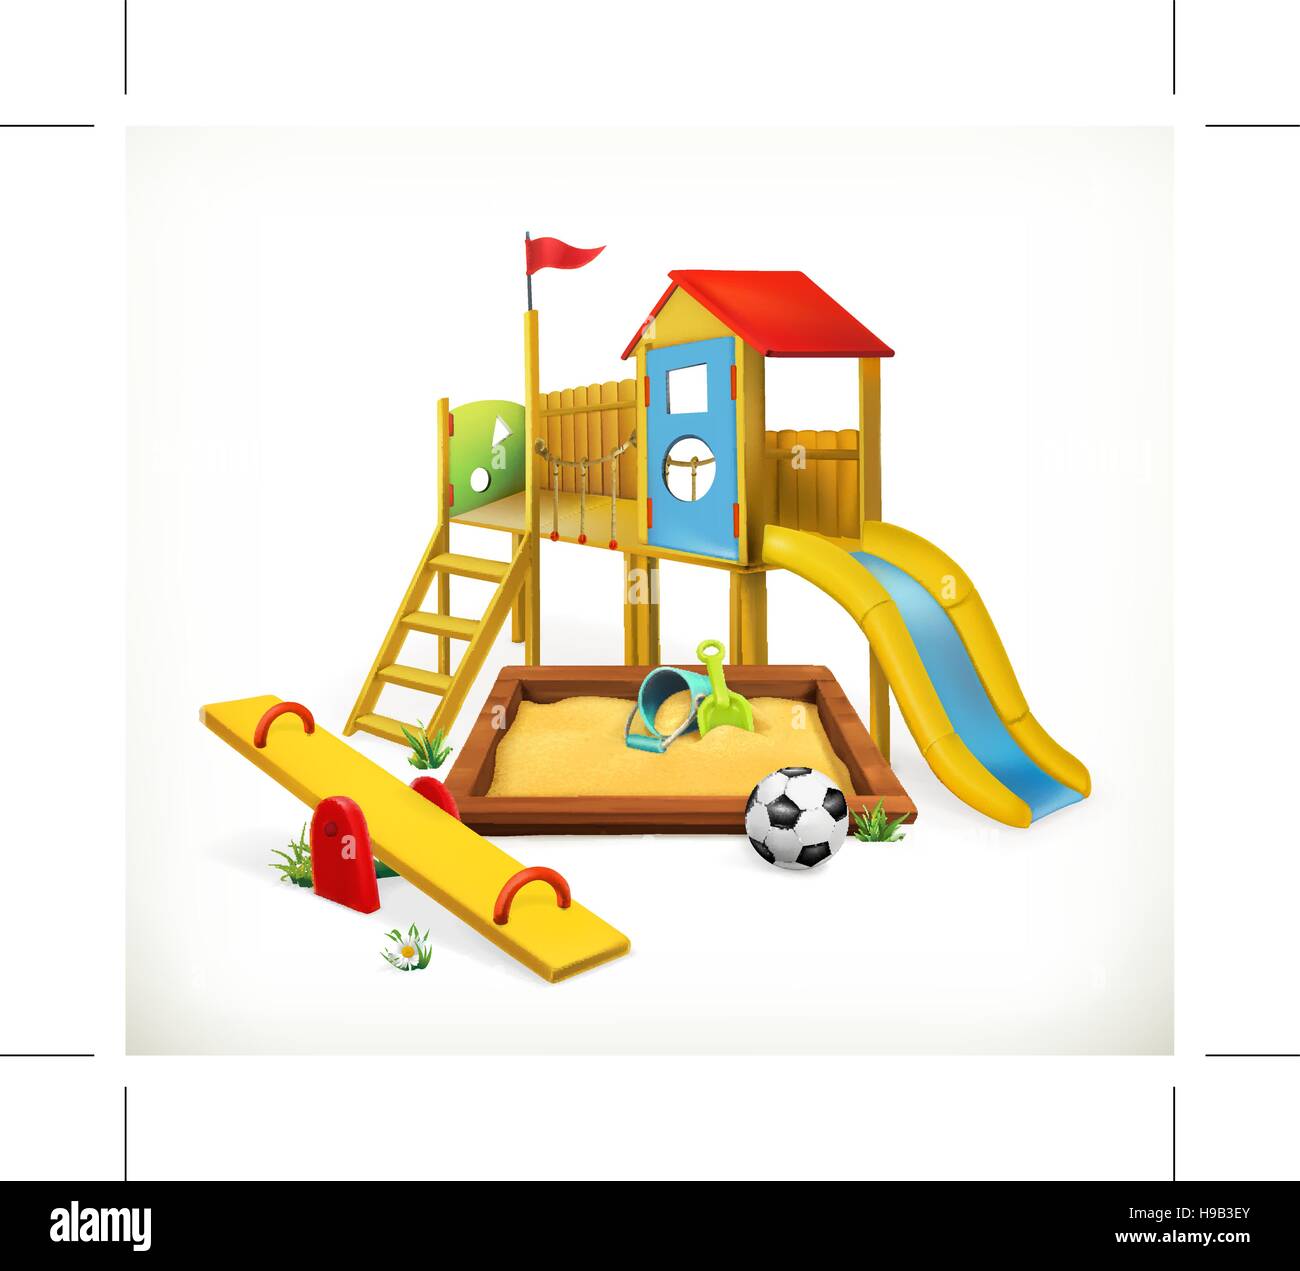 Playground, vector illustration Stock Vector